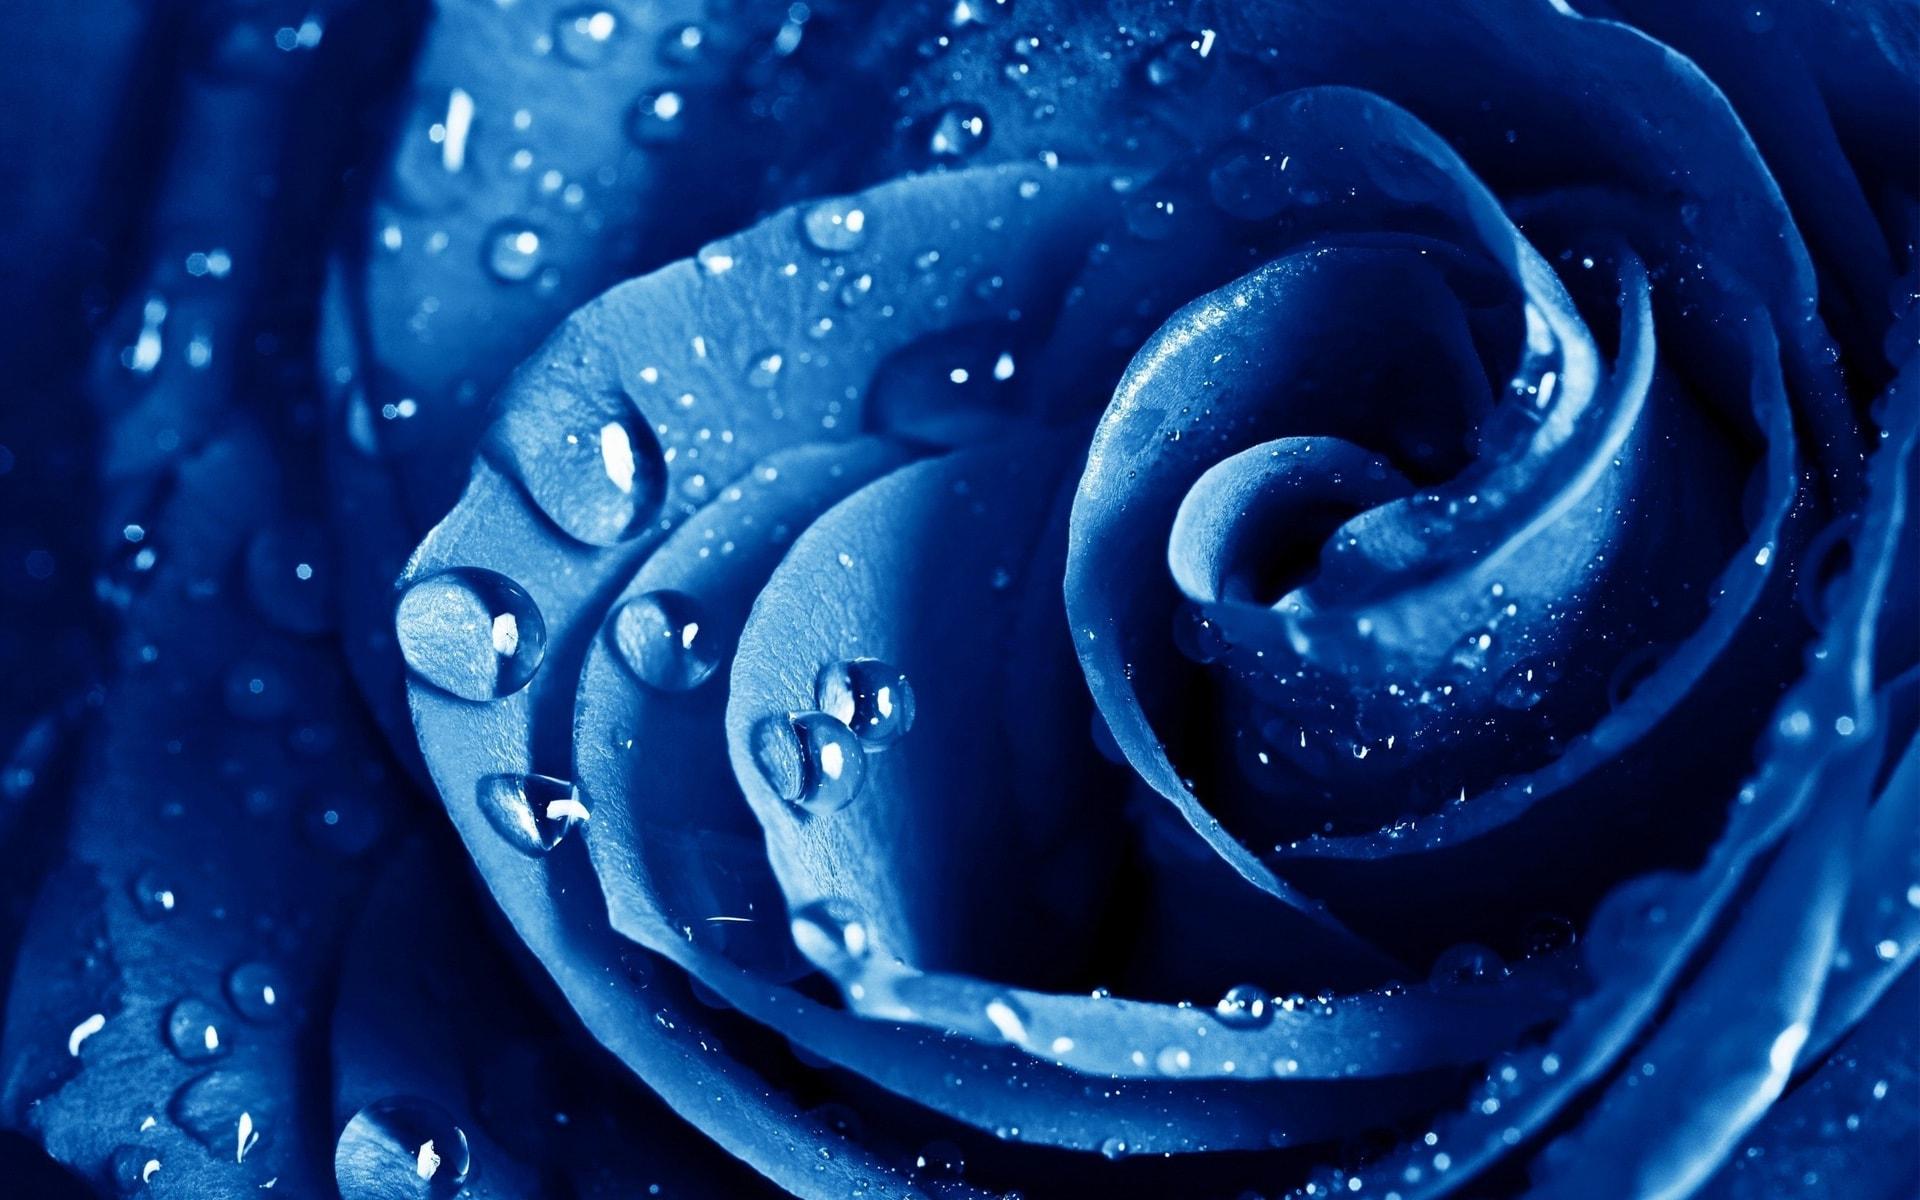 Blue Rose HD Wallpaperwallpaper.net